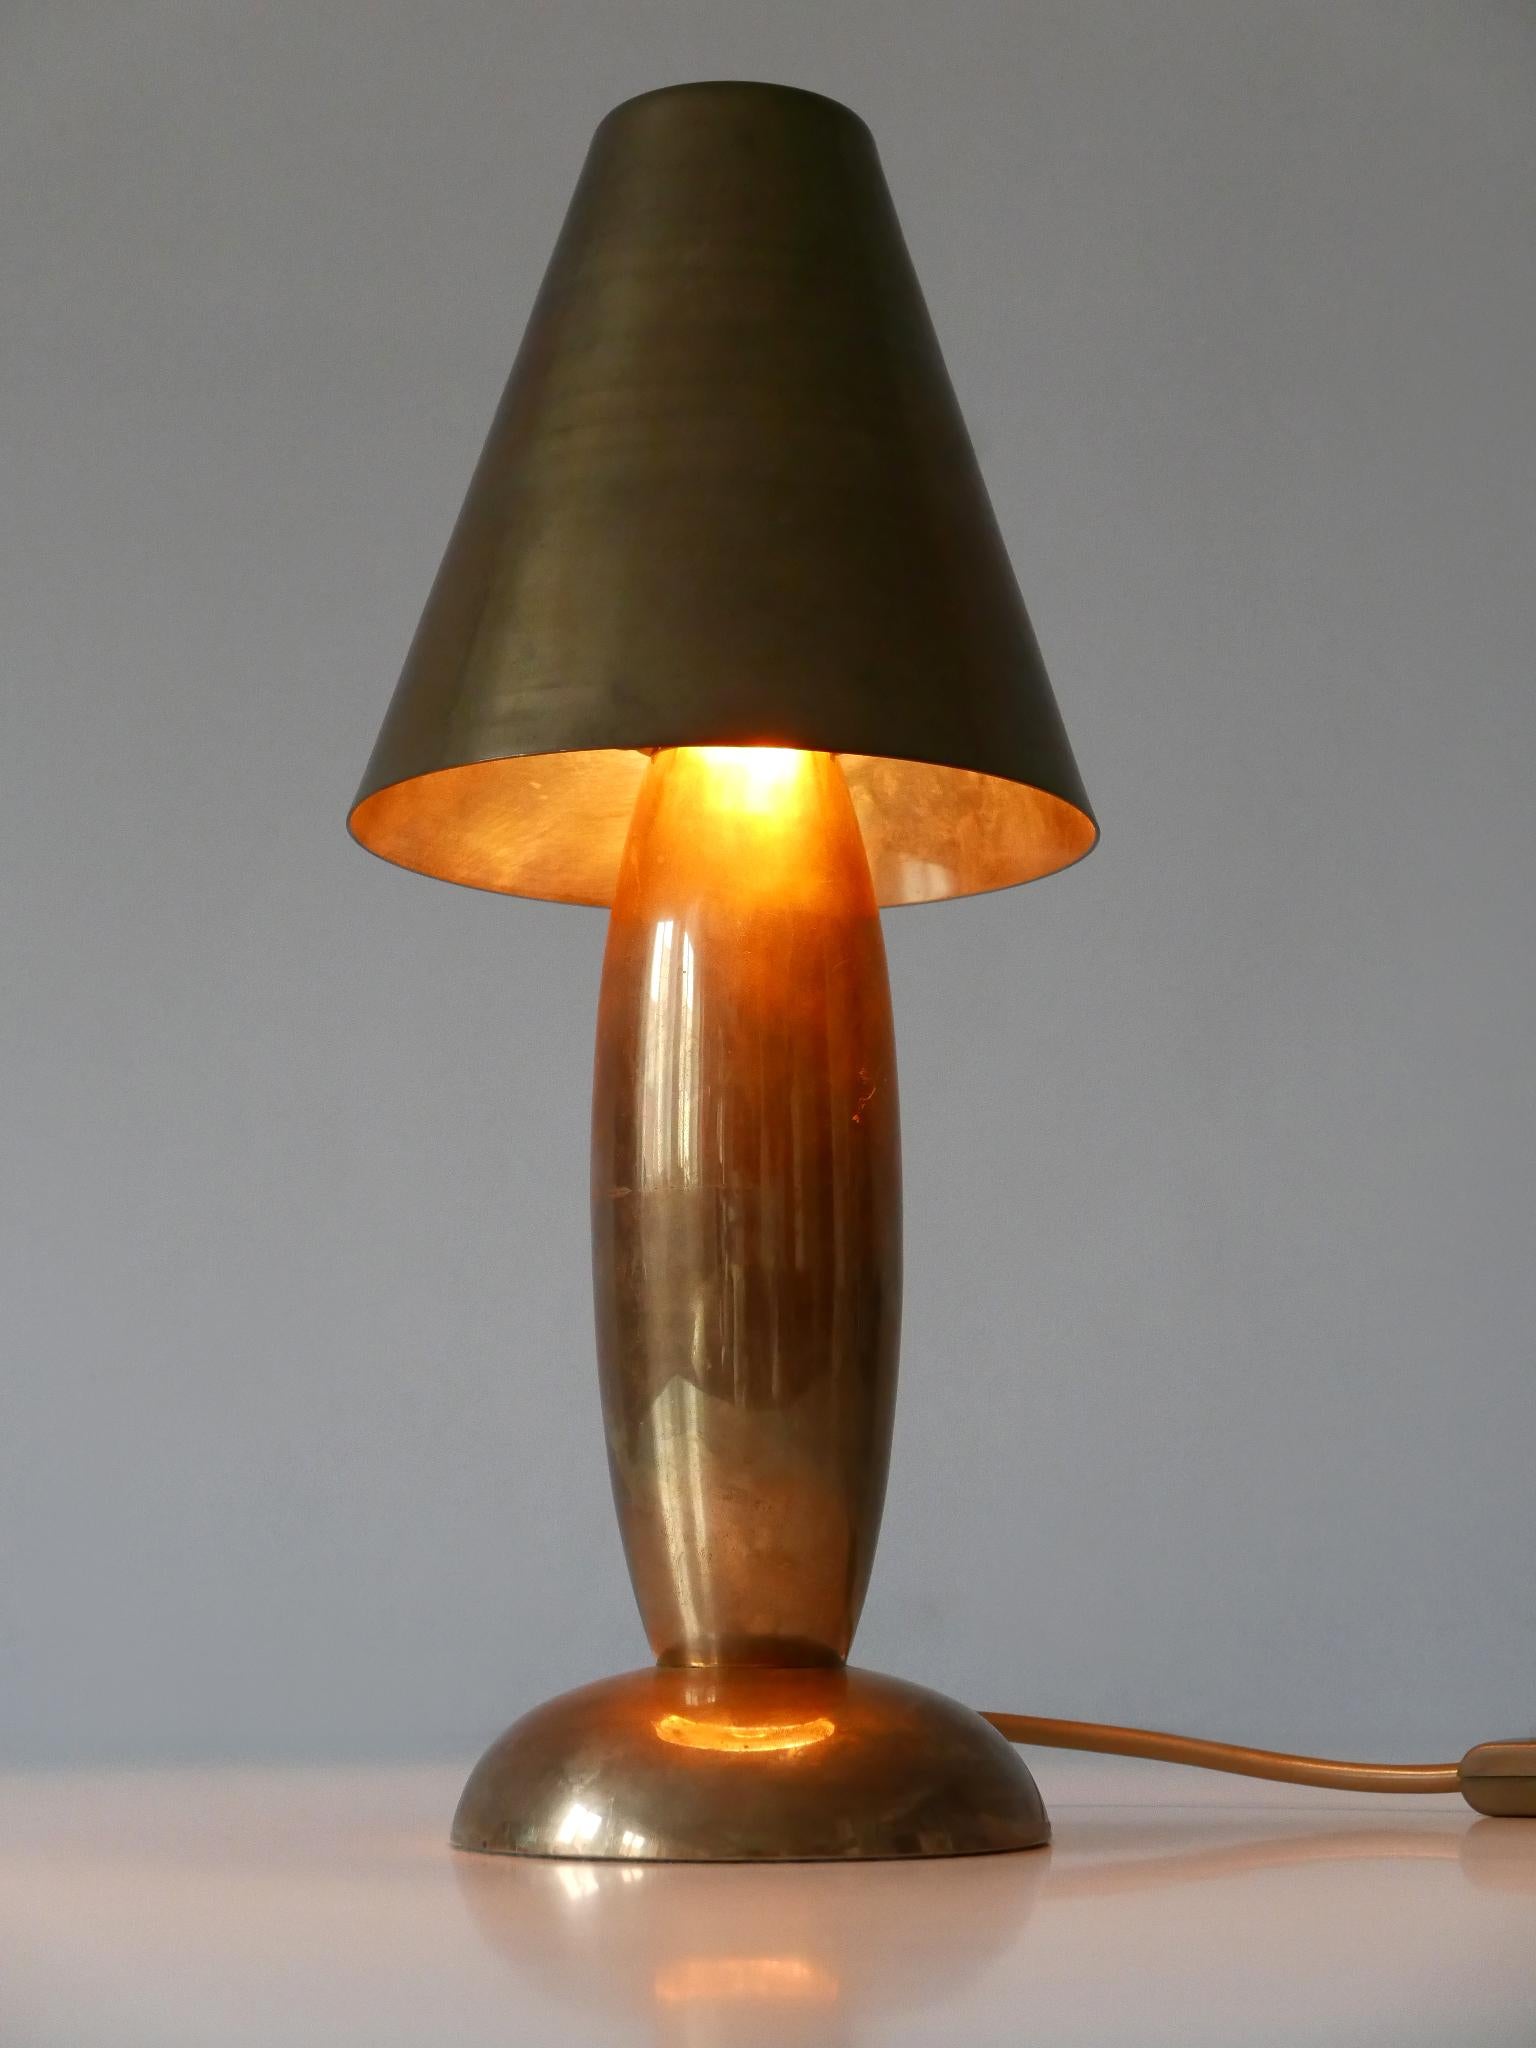 Rare & Lovely Mid-Century Modern Brass Side Table Lamp by Lambert Germany 1970s 5